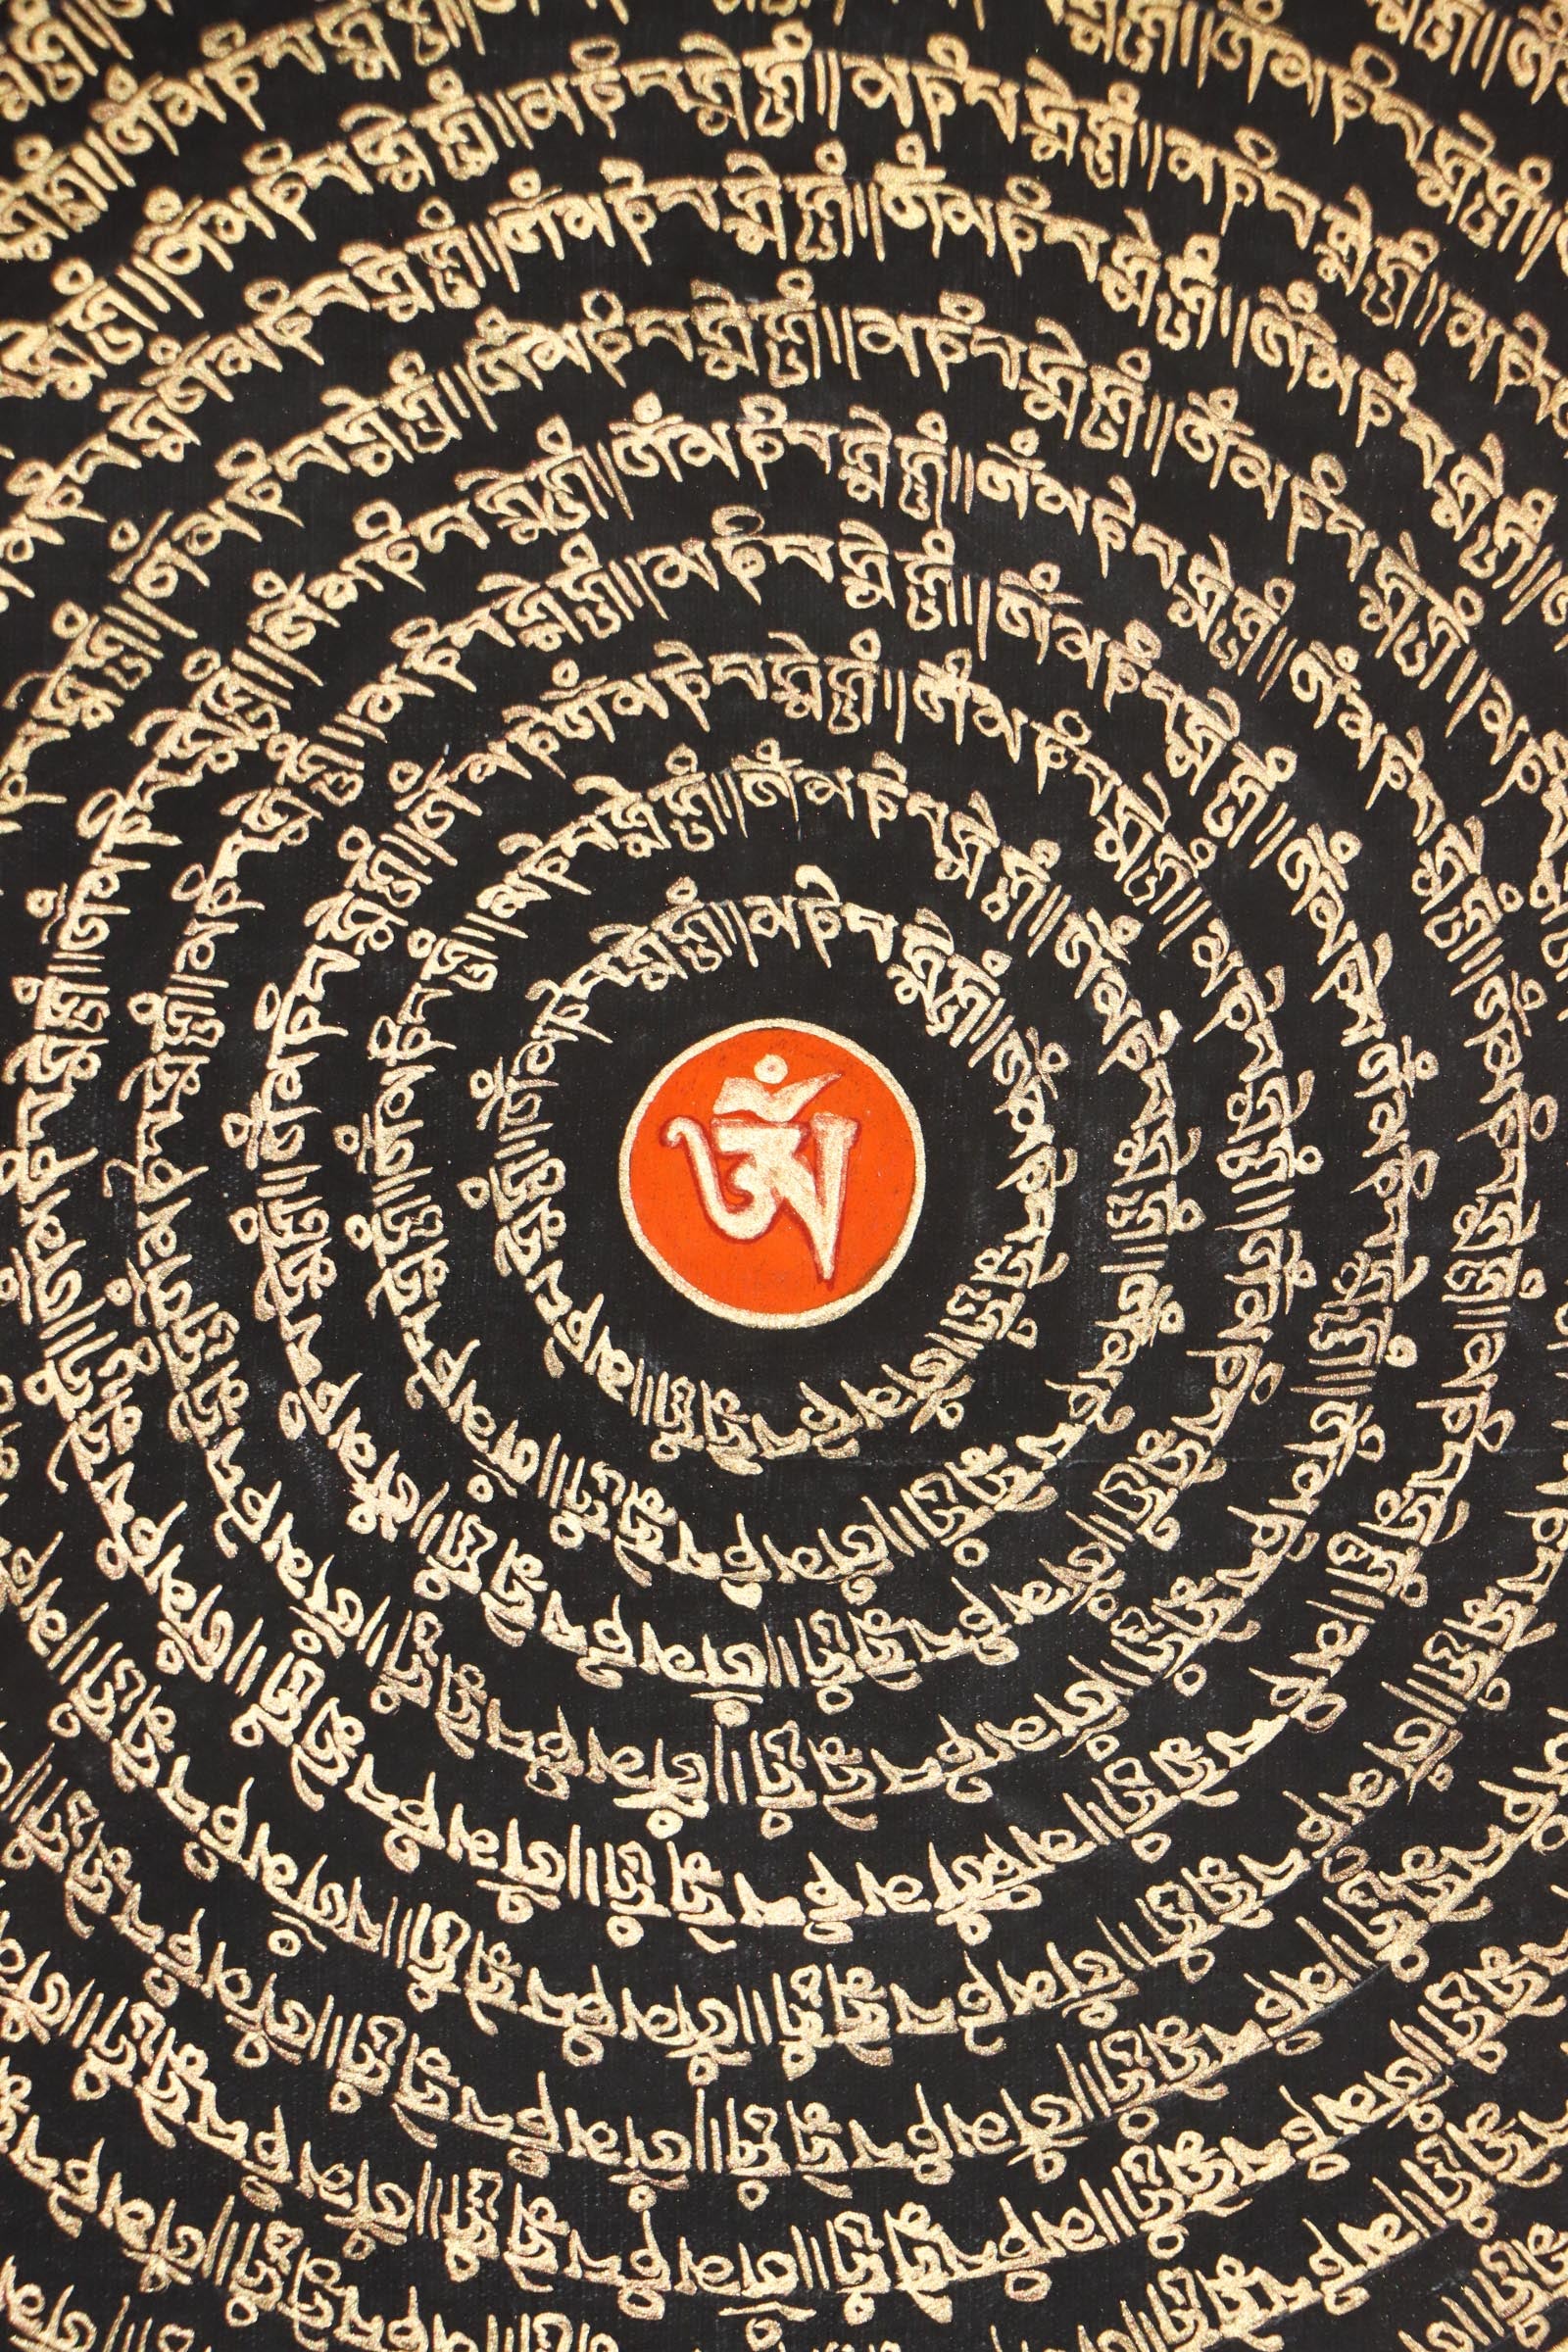 Tibetan Mantra Mandala for wall decor and positivity .